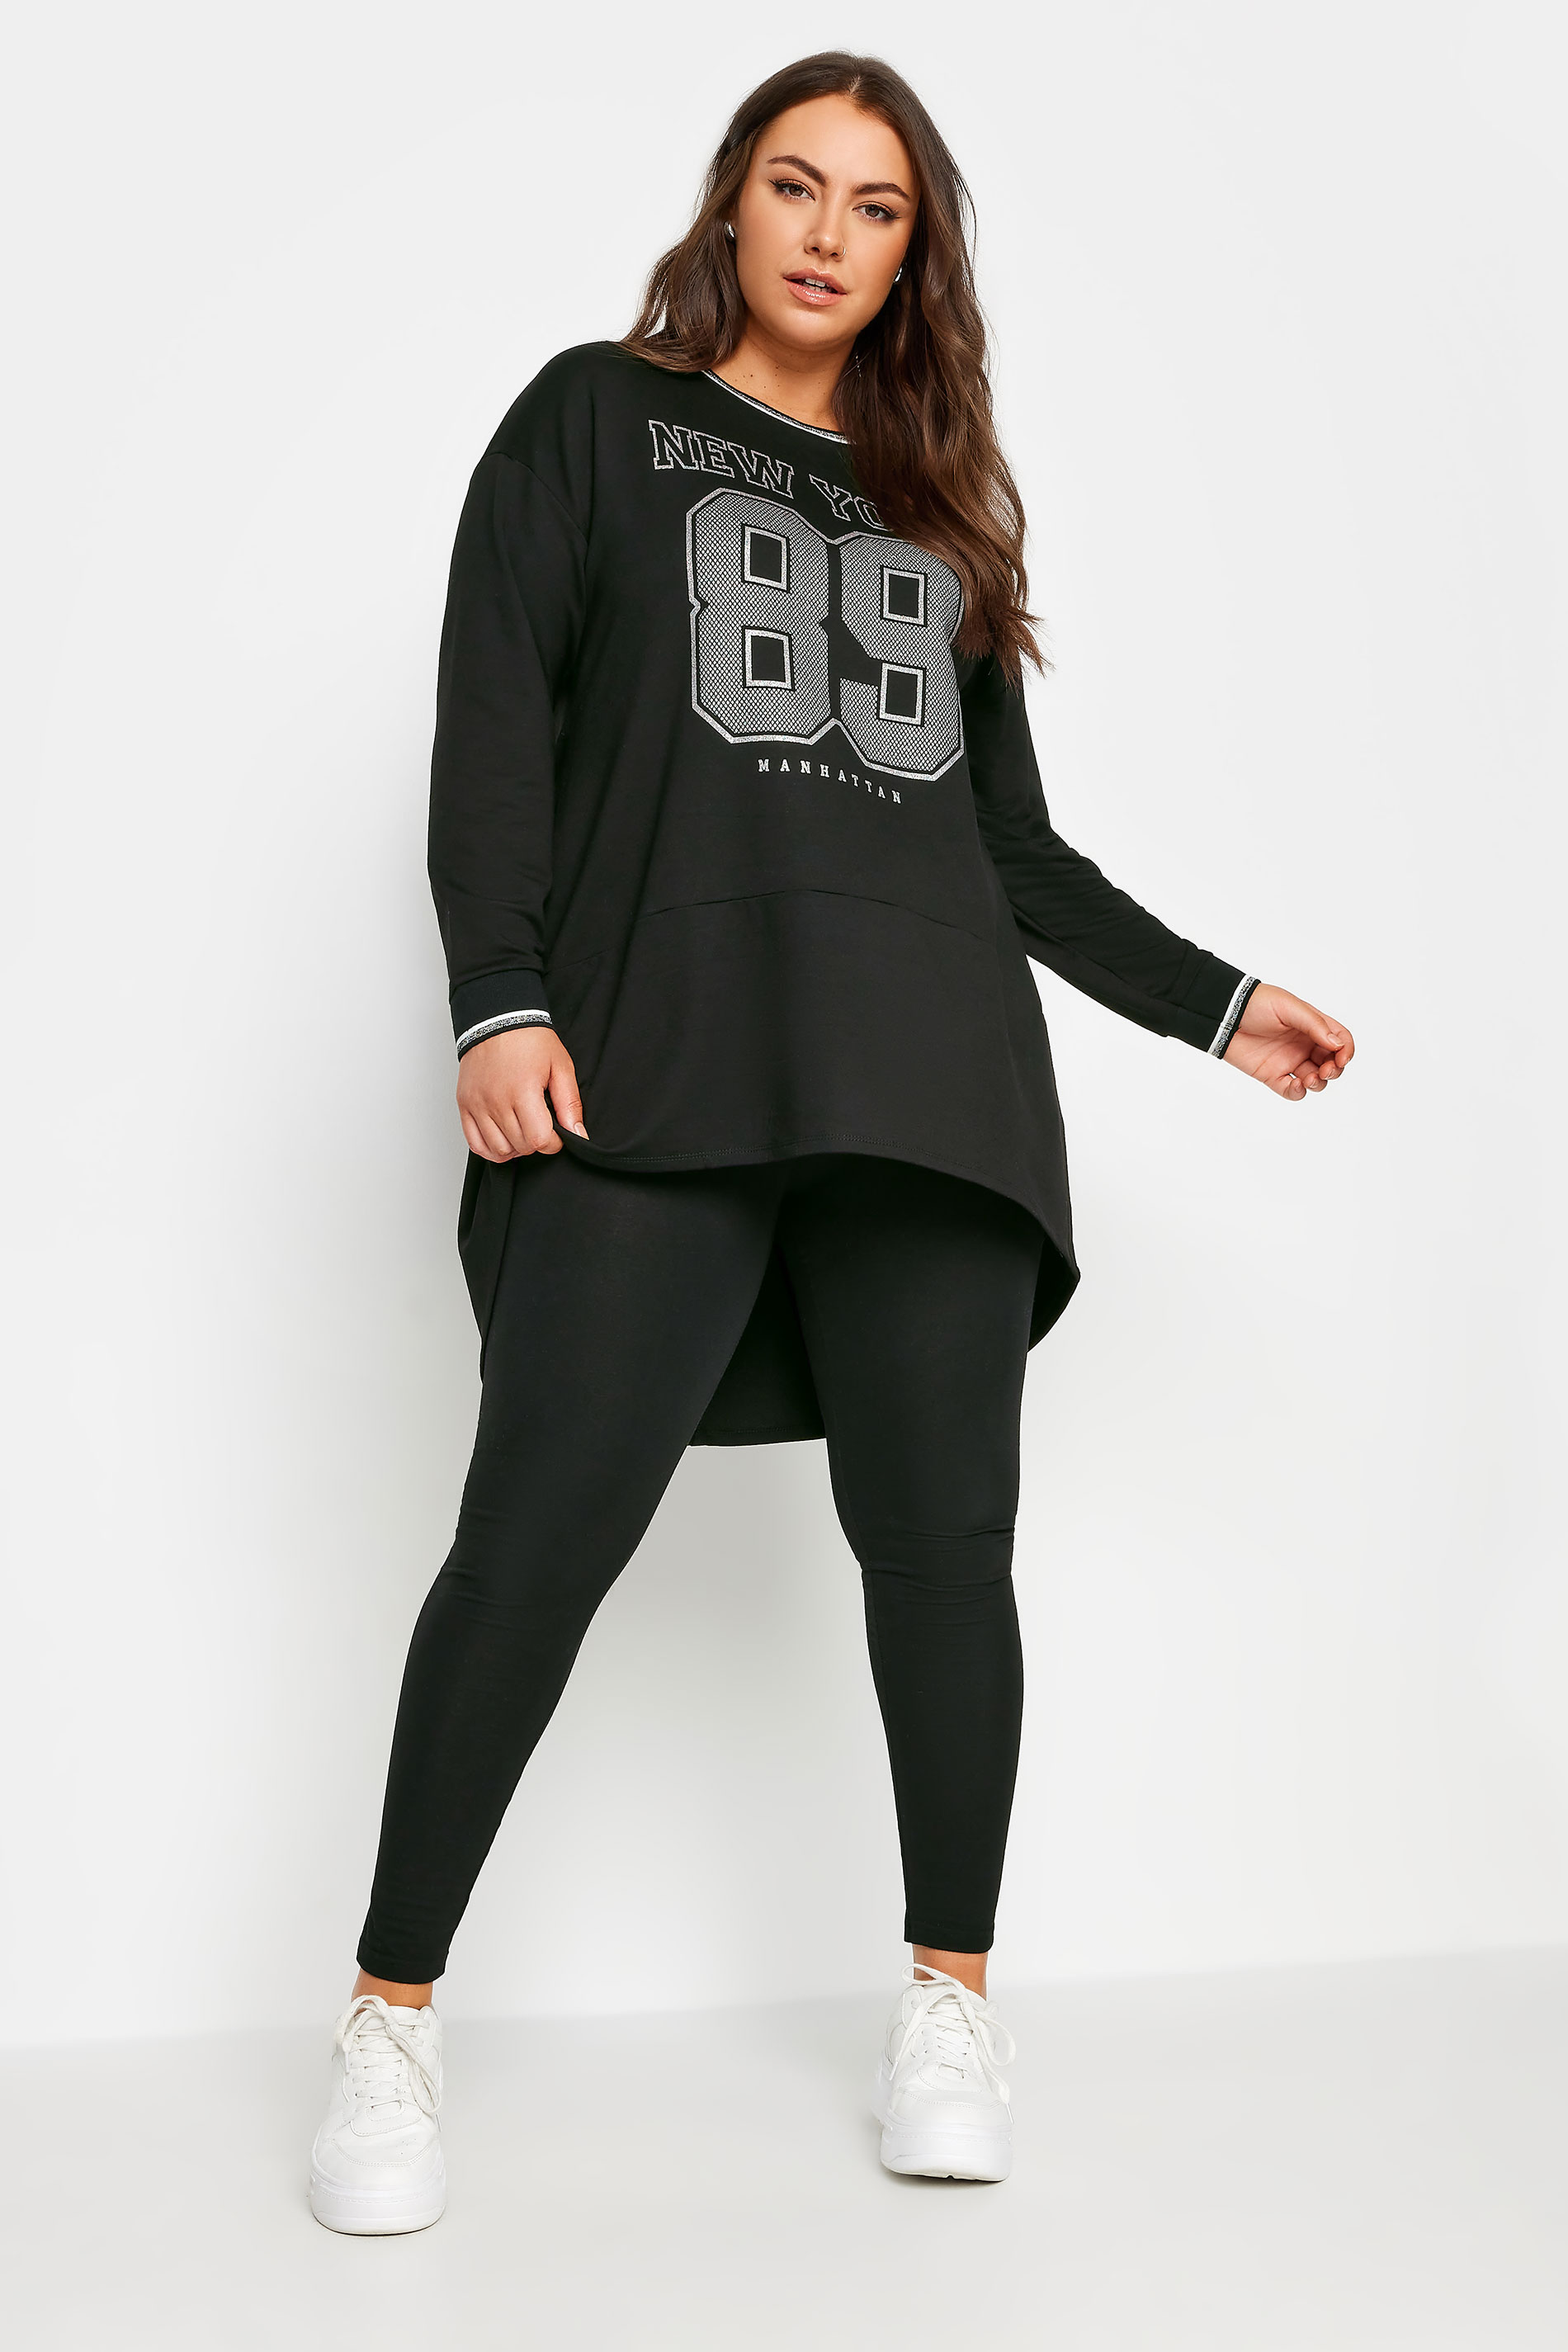 YOURS Plus Size Black 'New York' Glitter Slogan Sweatshirt | Yours Clothing 2